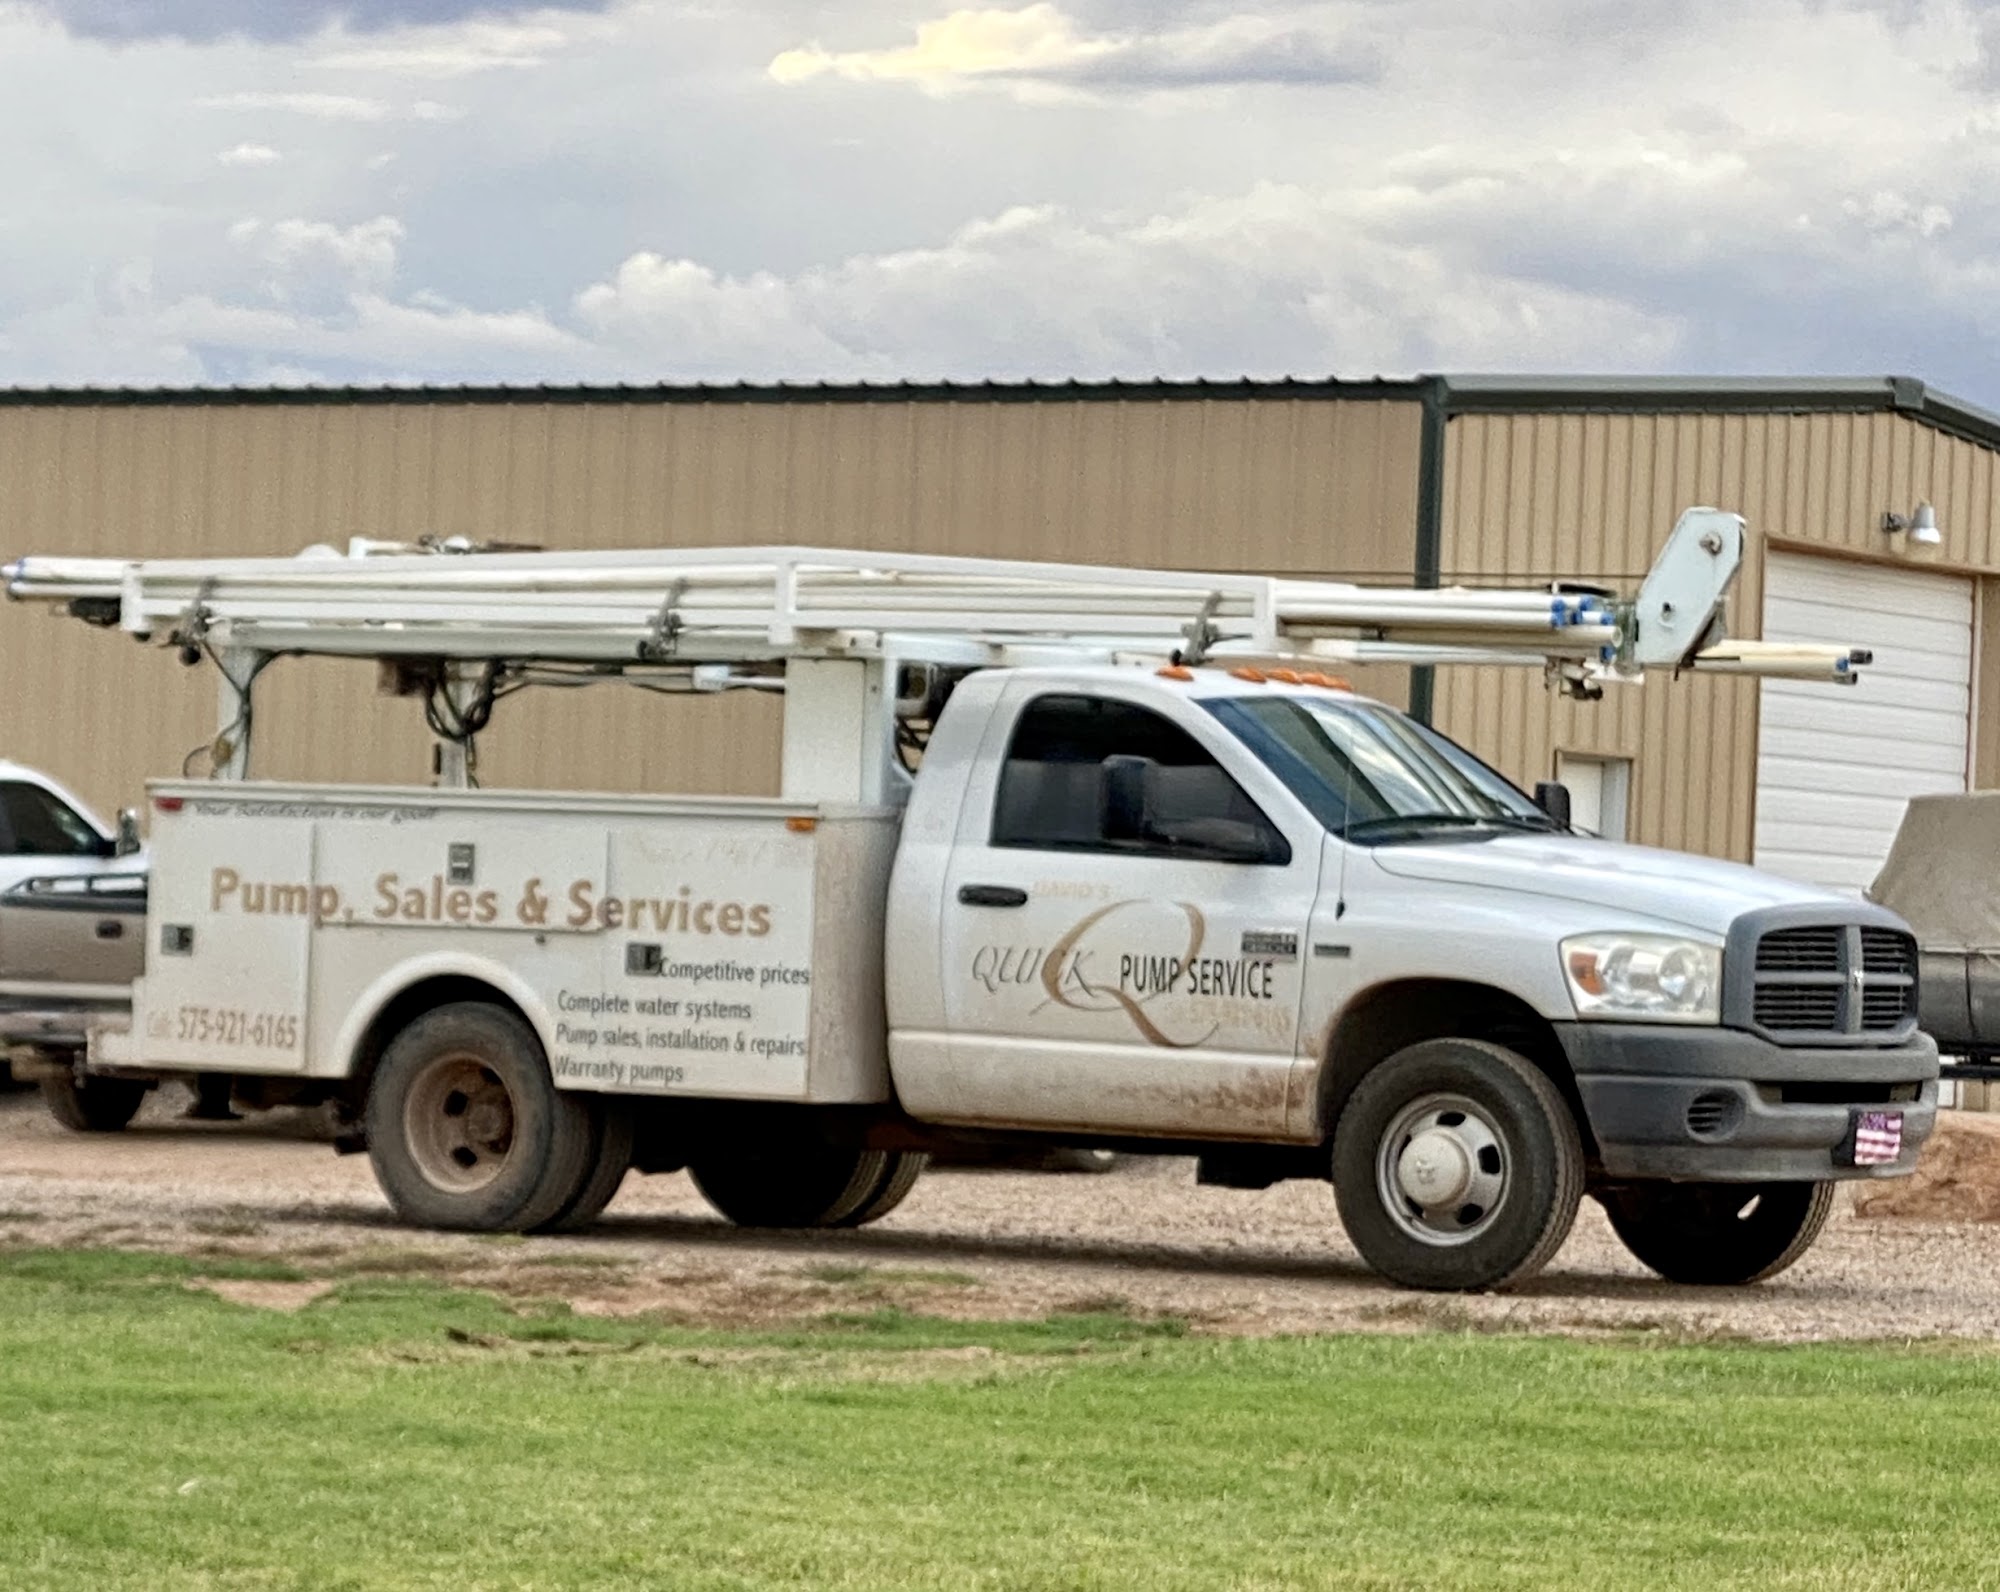 Quick Pump Services 31 estancia, La Luz New Mexico 88337